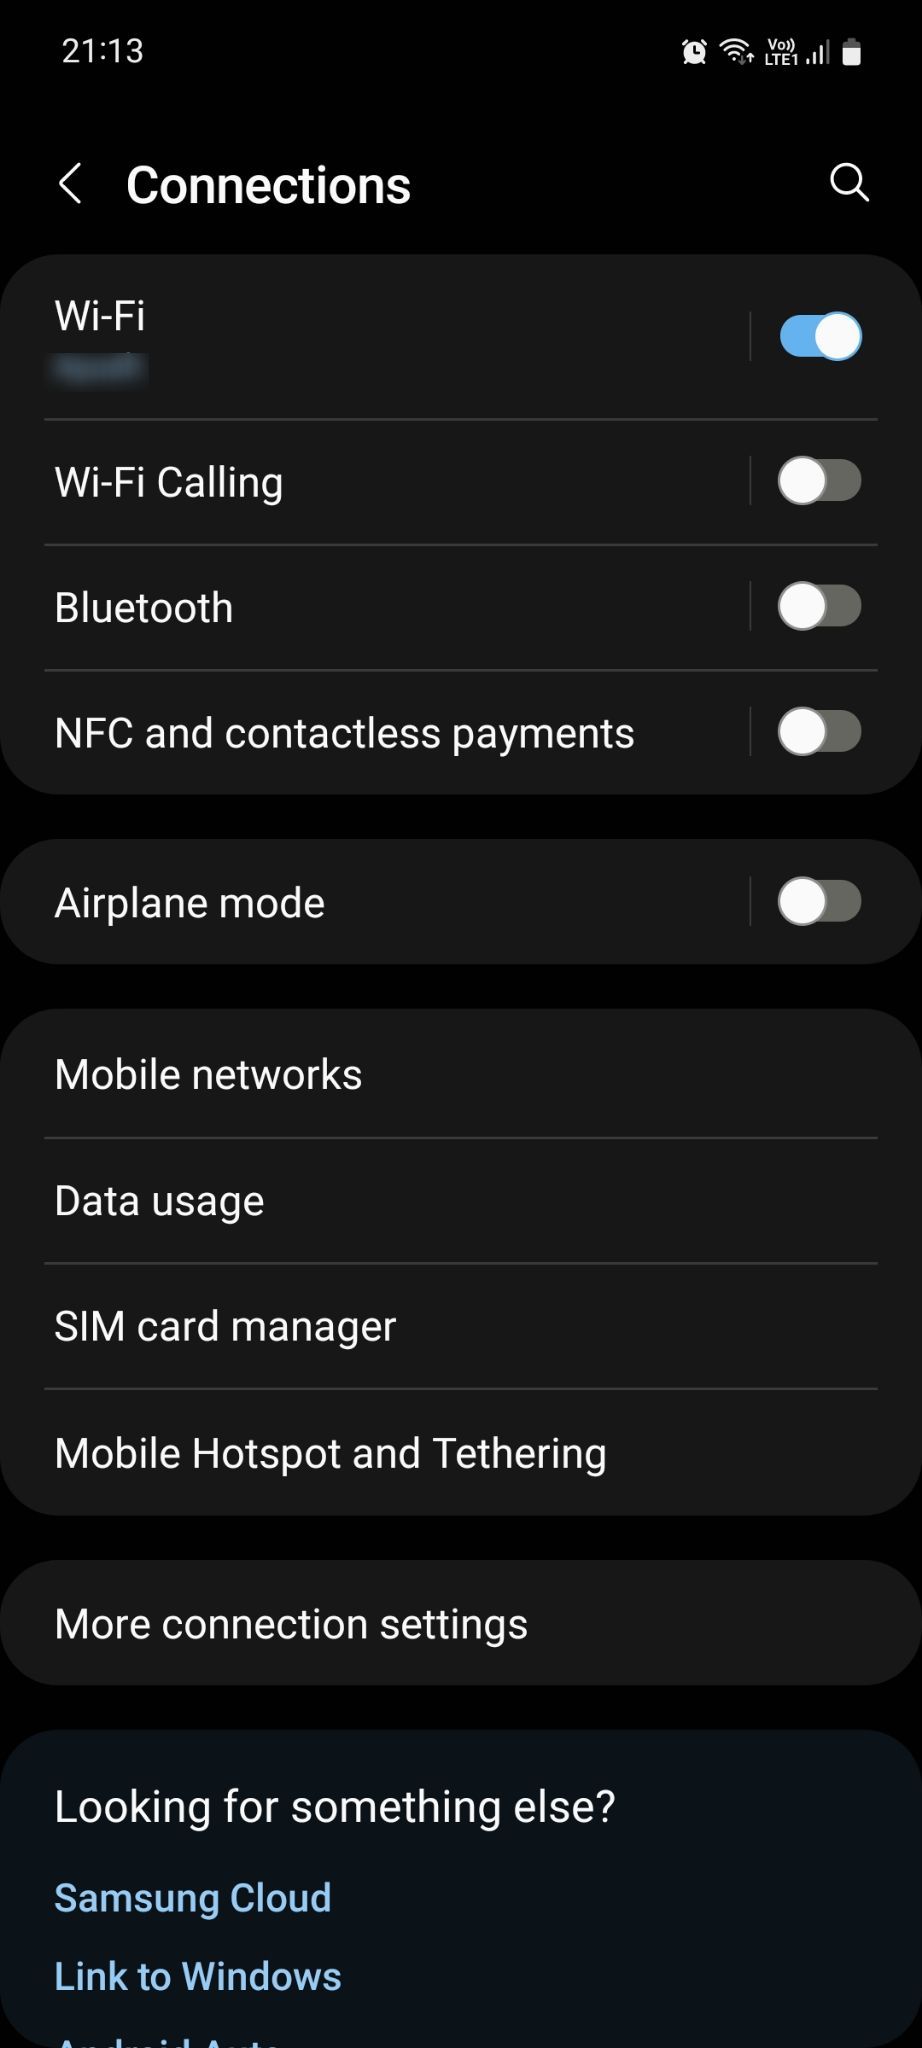 Samsung Connections menu